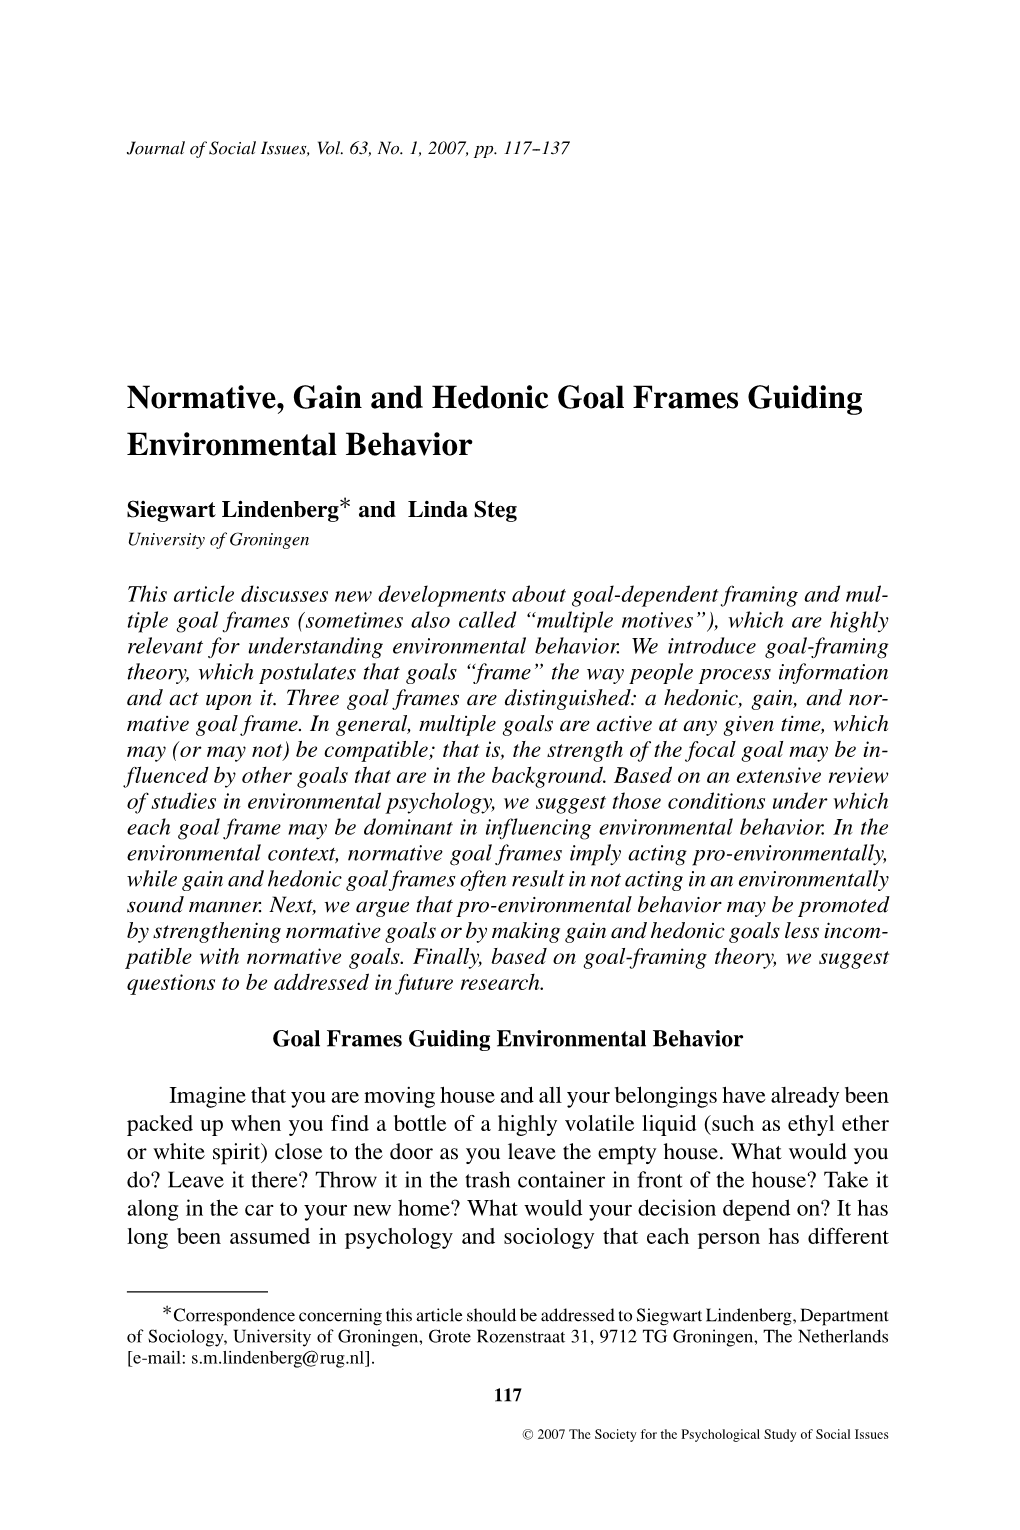 Normative, Gain and Hedonic Goal Frames Guiding Environmental Behavior ∗ Siegwart Lindenberg and Linda Steg University of Groningen